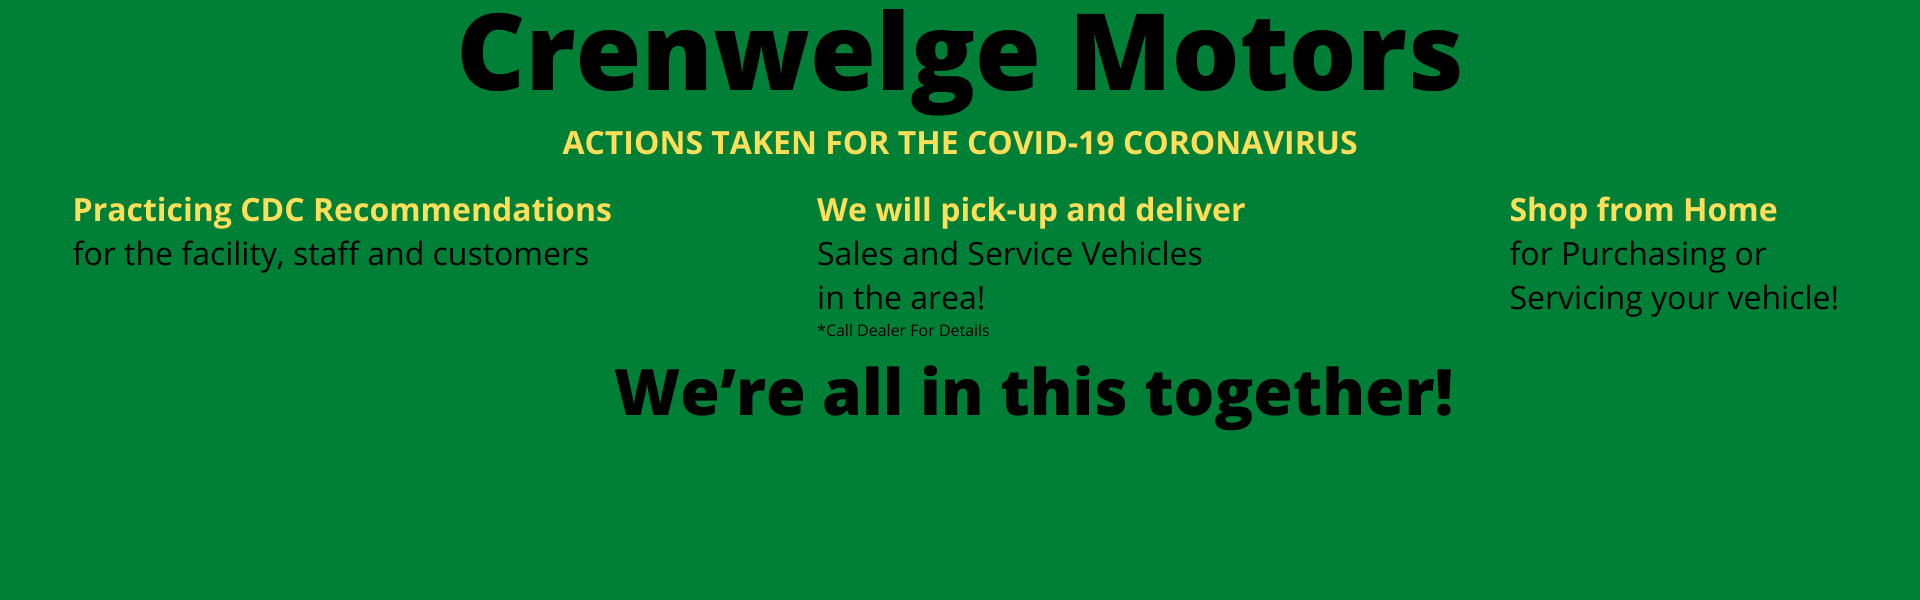 Crenwelge Motors COVID-19